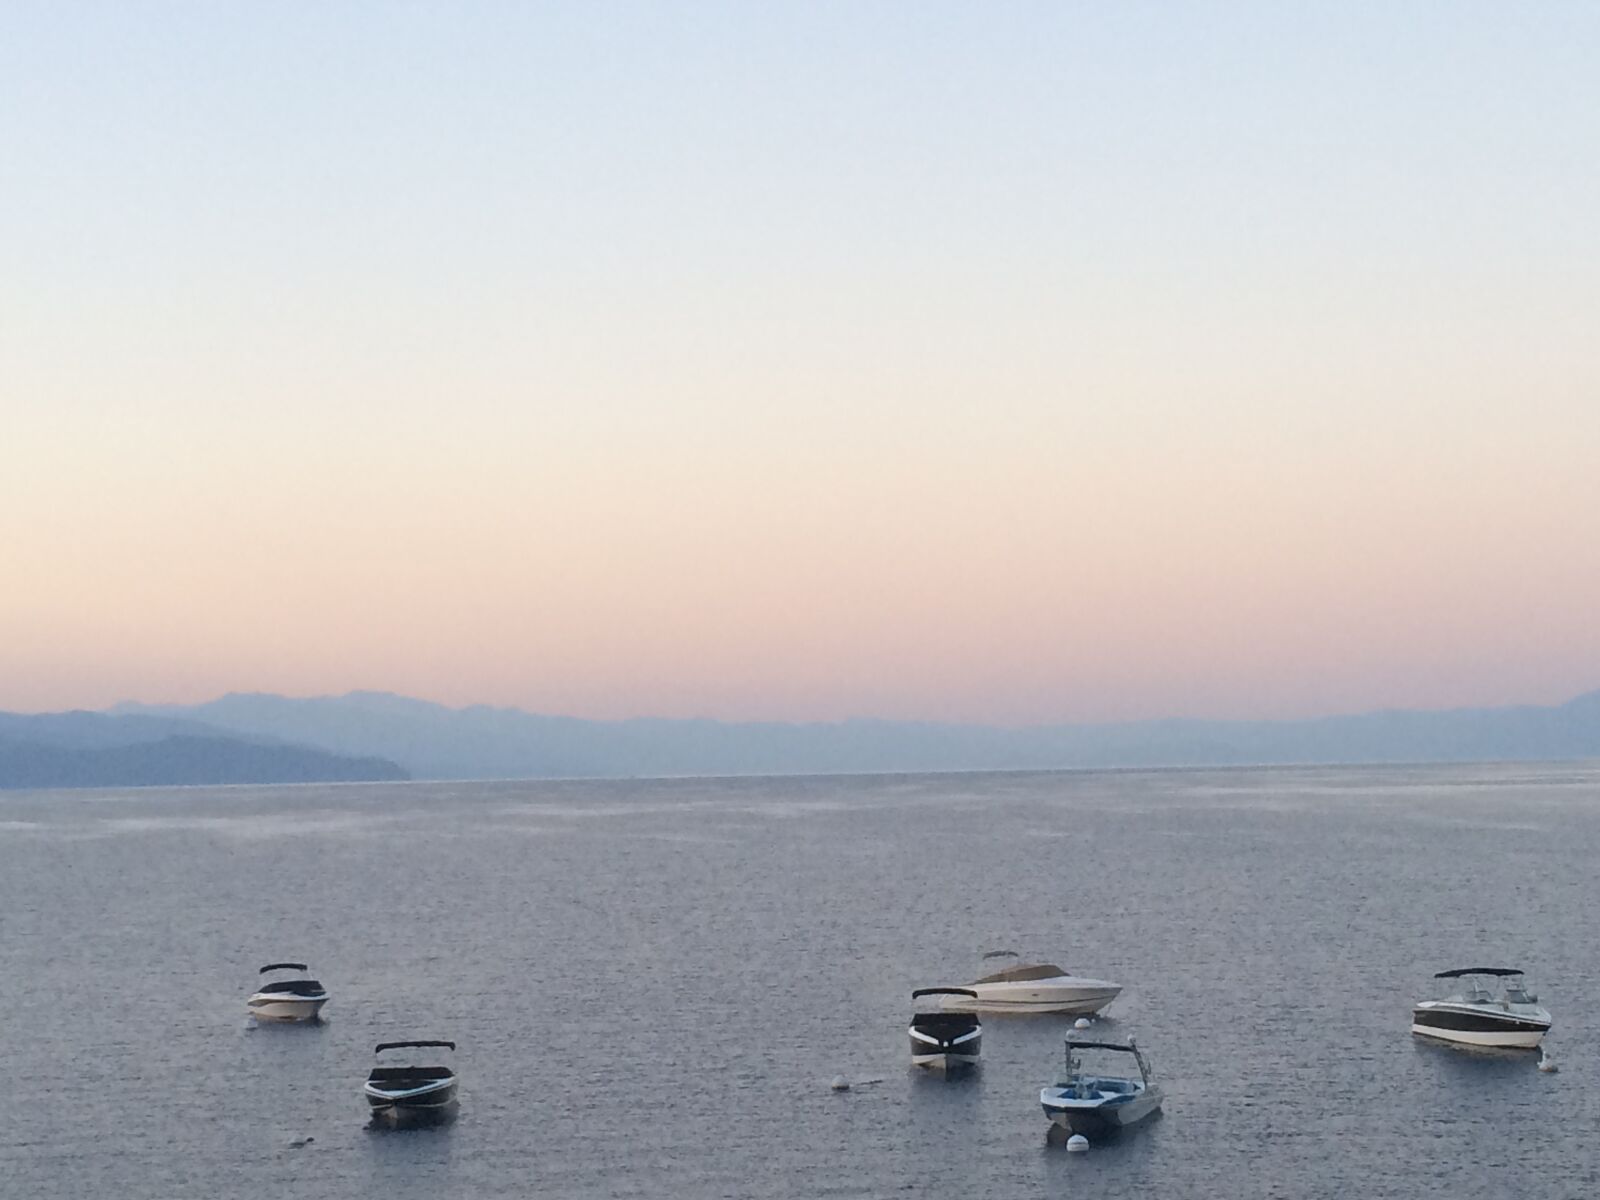 iPhone 5s back camera 4.15mm f/2.2 sample photo. Lake, boats, sunrise photography